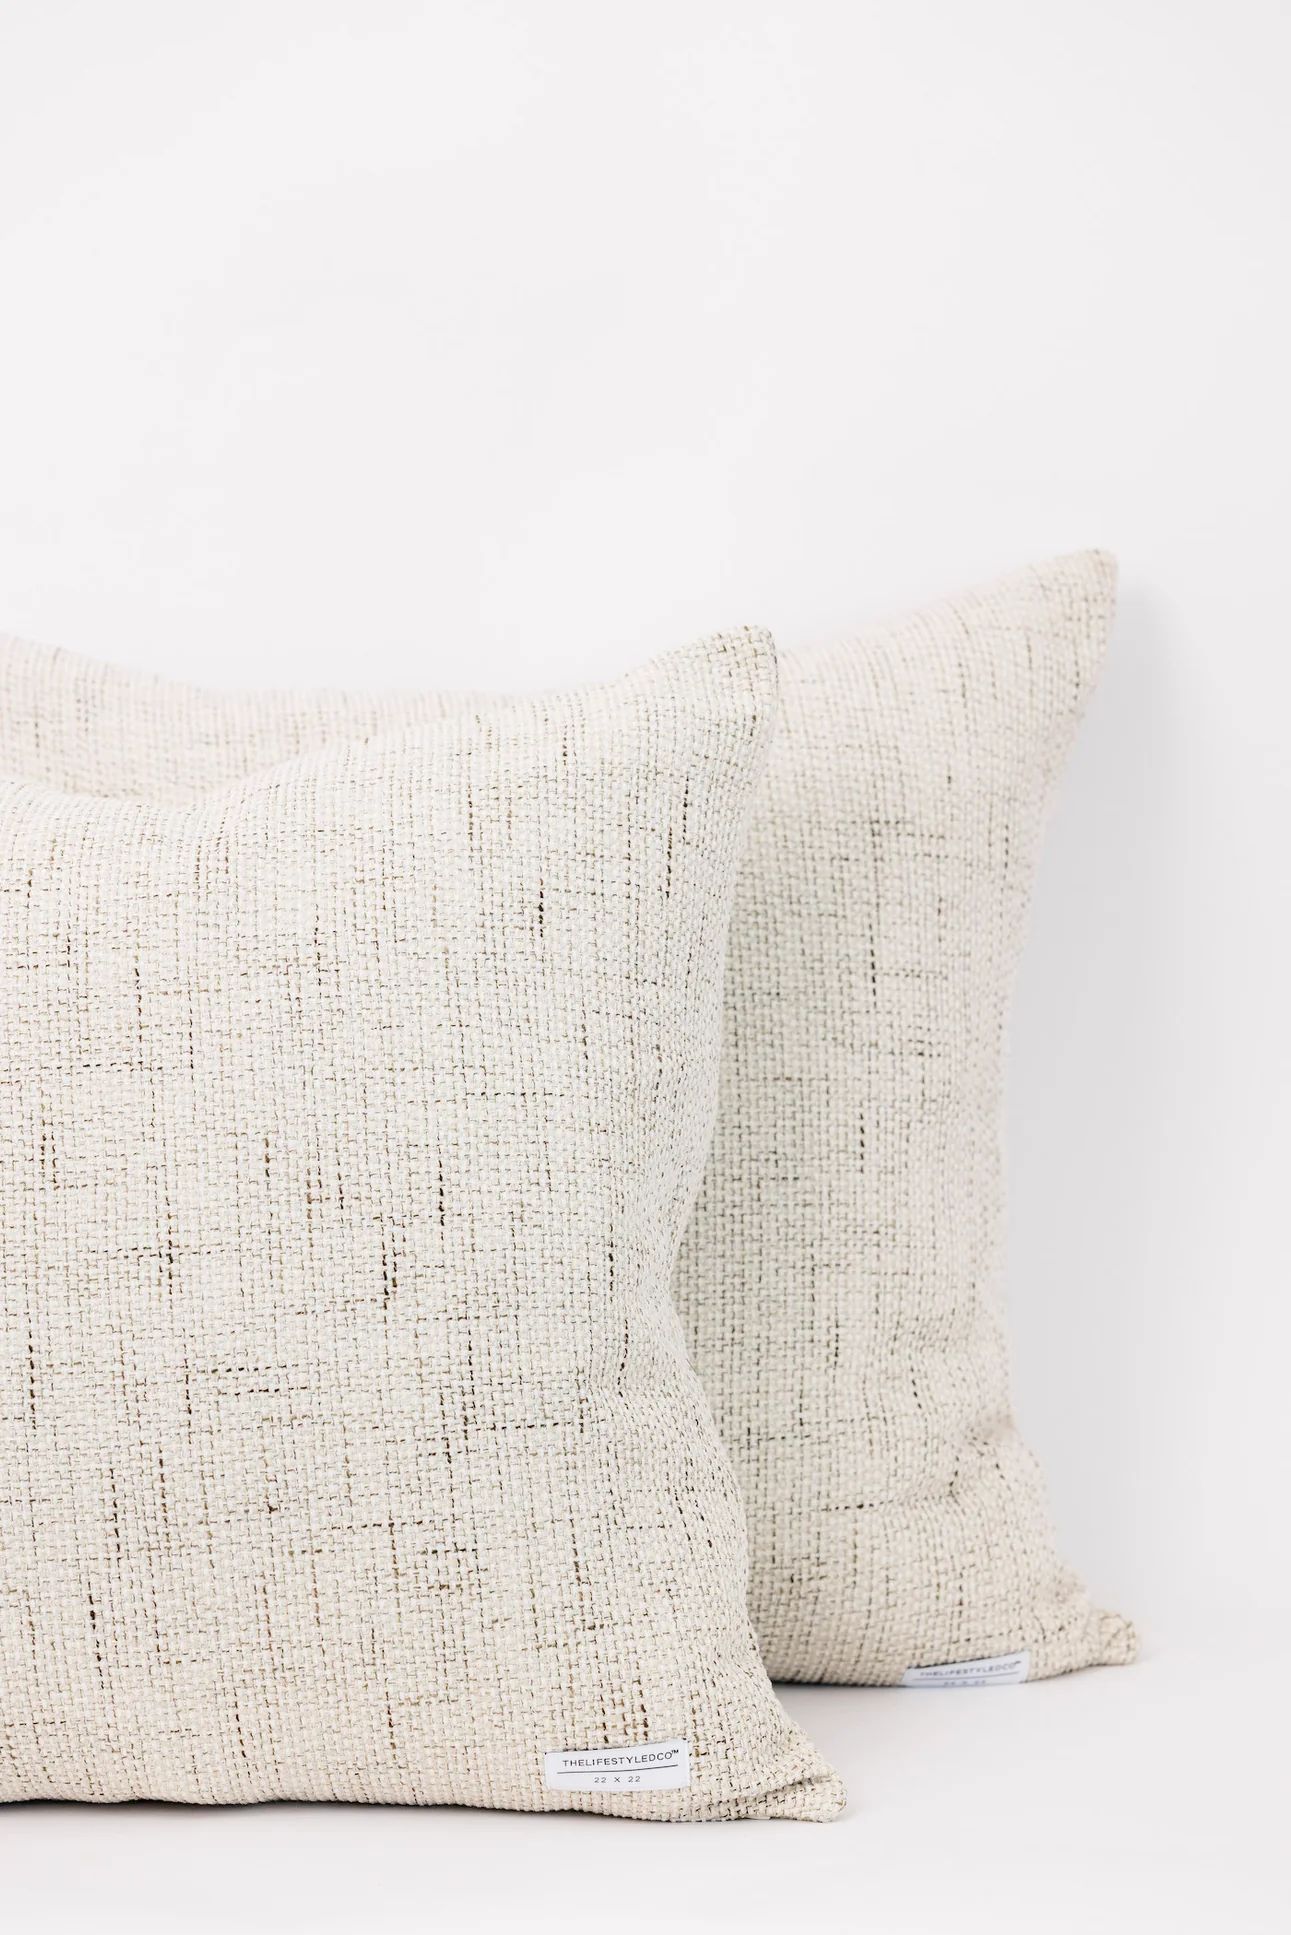 Alma Basketweave Pillow - Pearl - 2 Sizes | THELIFESTYLEDCO